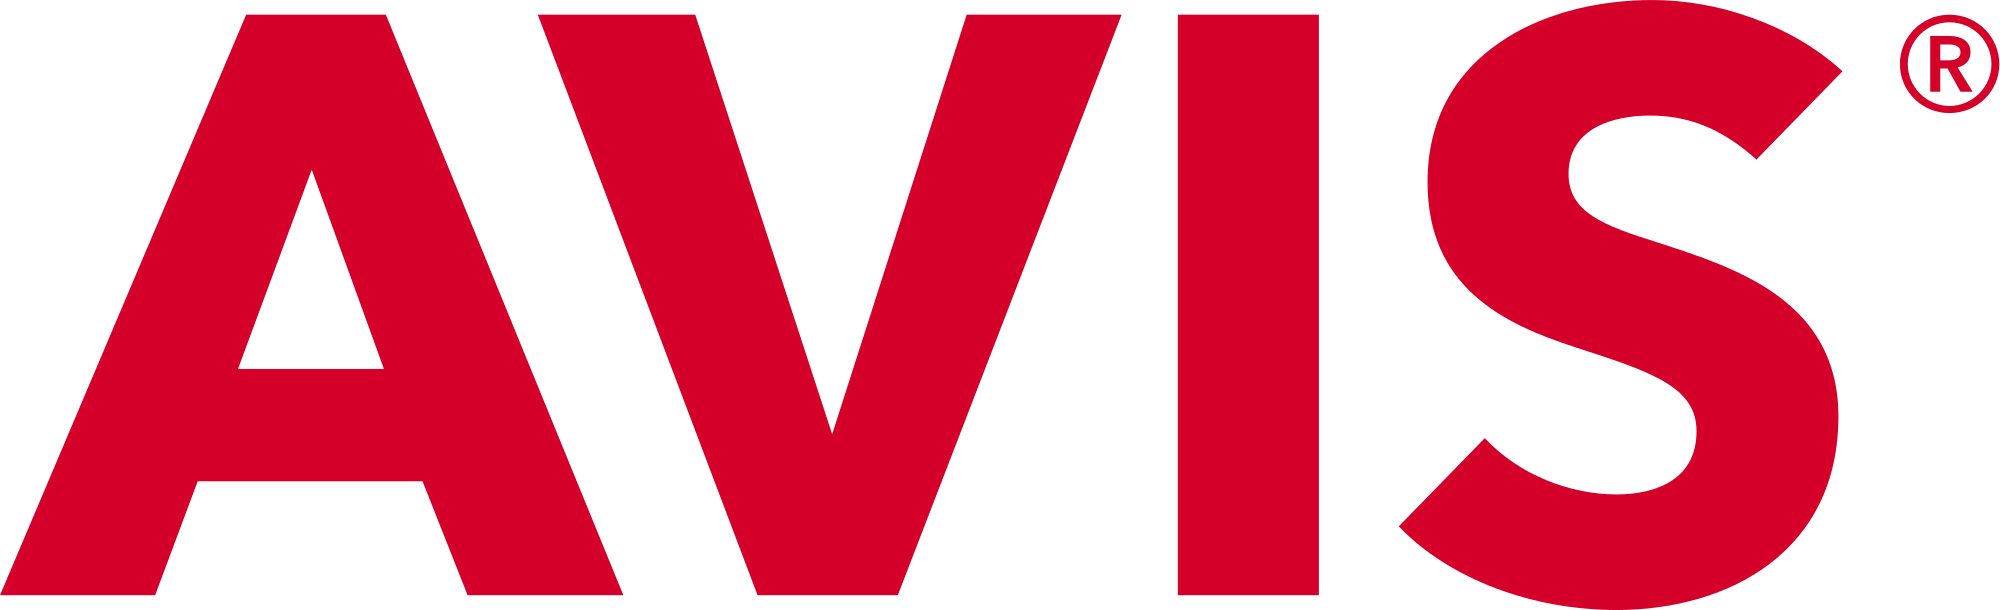 Avis Car Rental Manila Philippines - Avis Logo Png (2000x610)